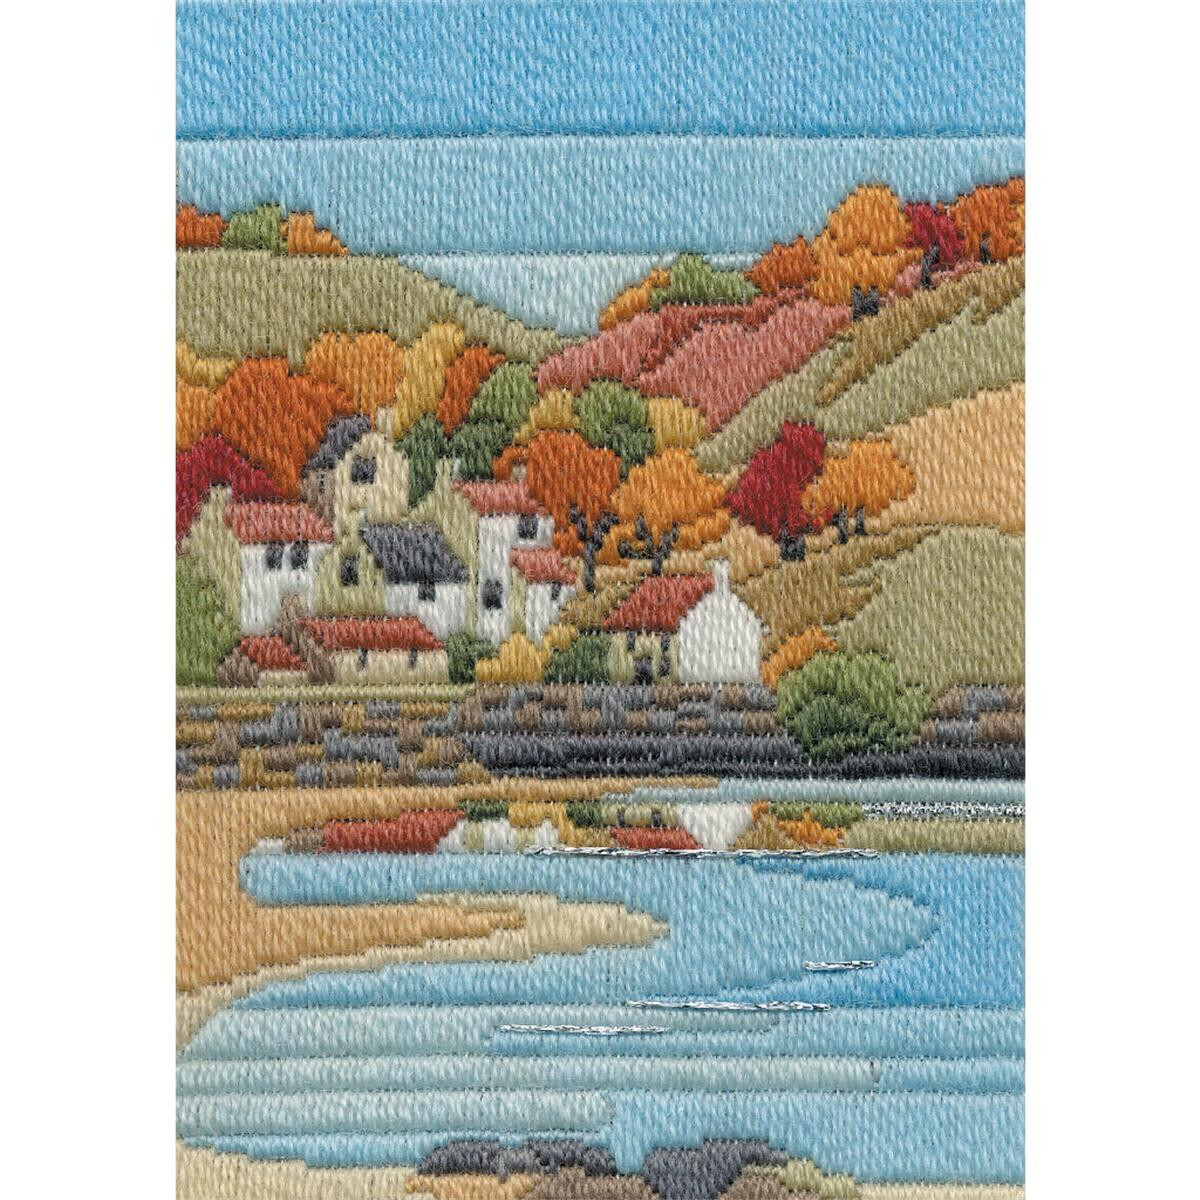 A colorful embroidered landscape shows a coastal village...